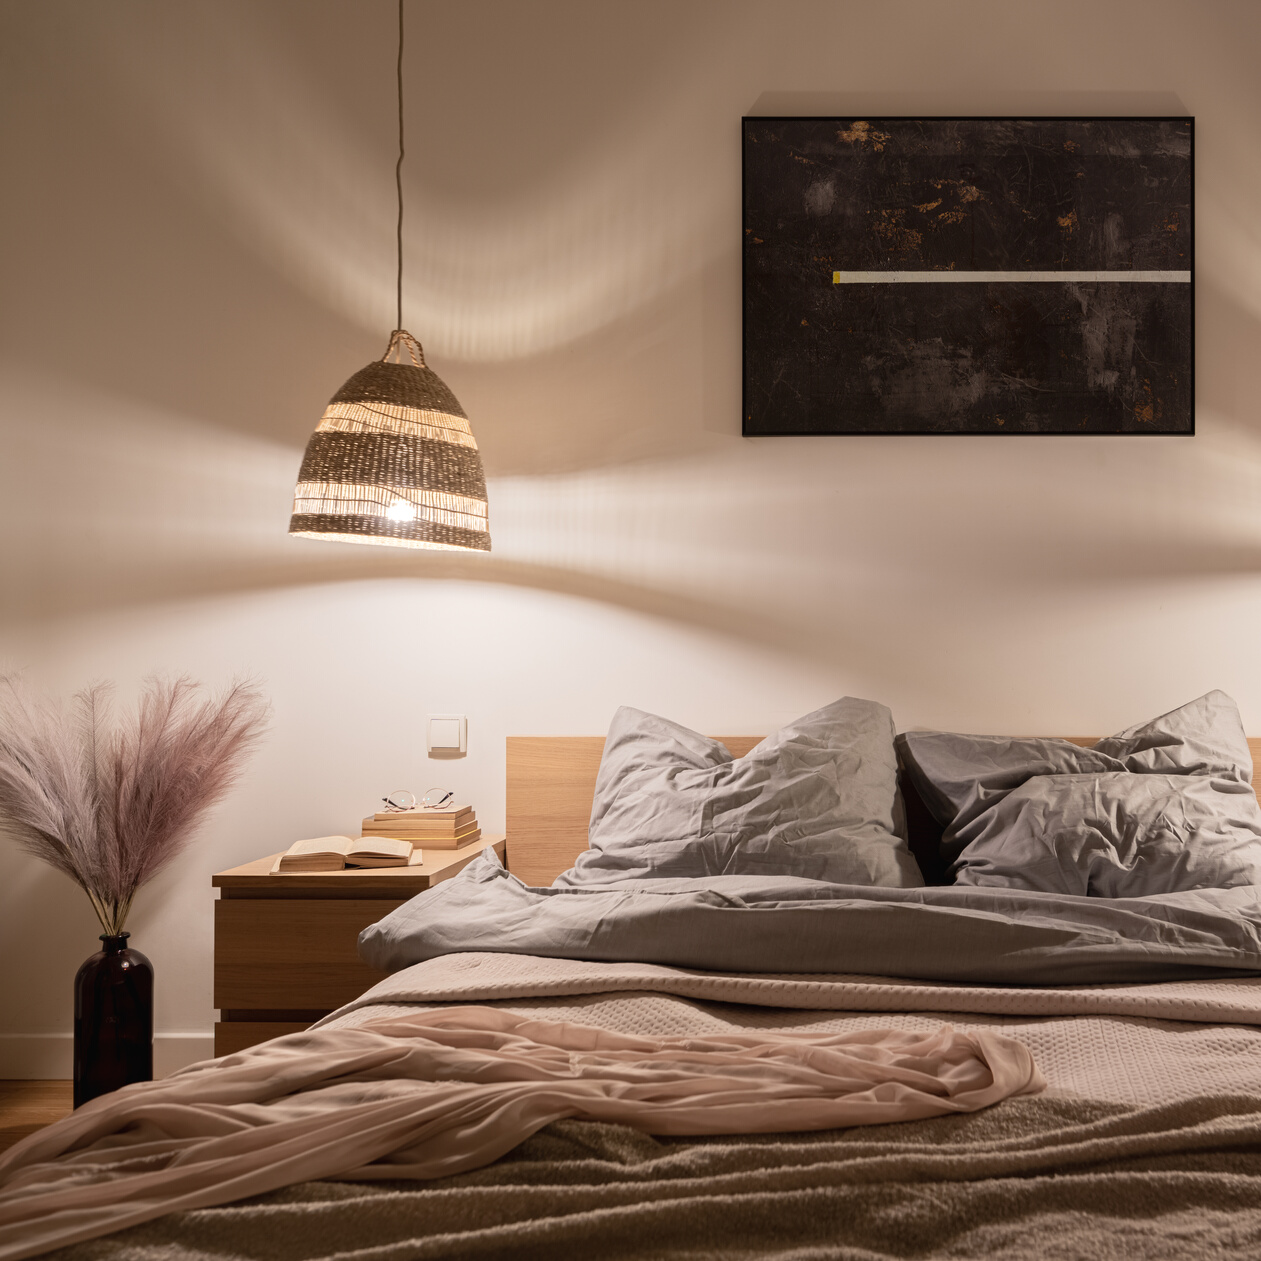 Cozy bedroom with warm light